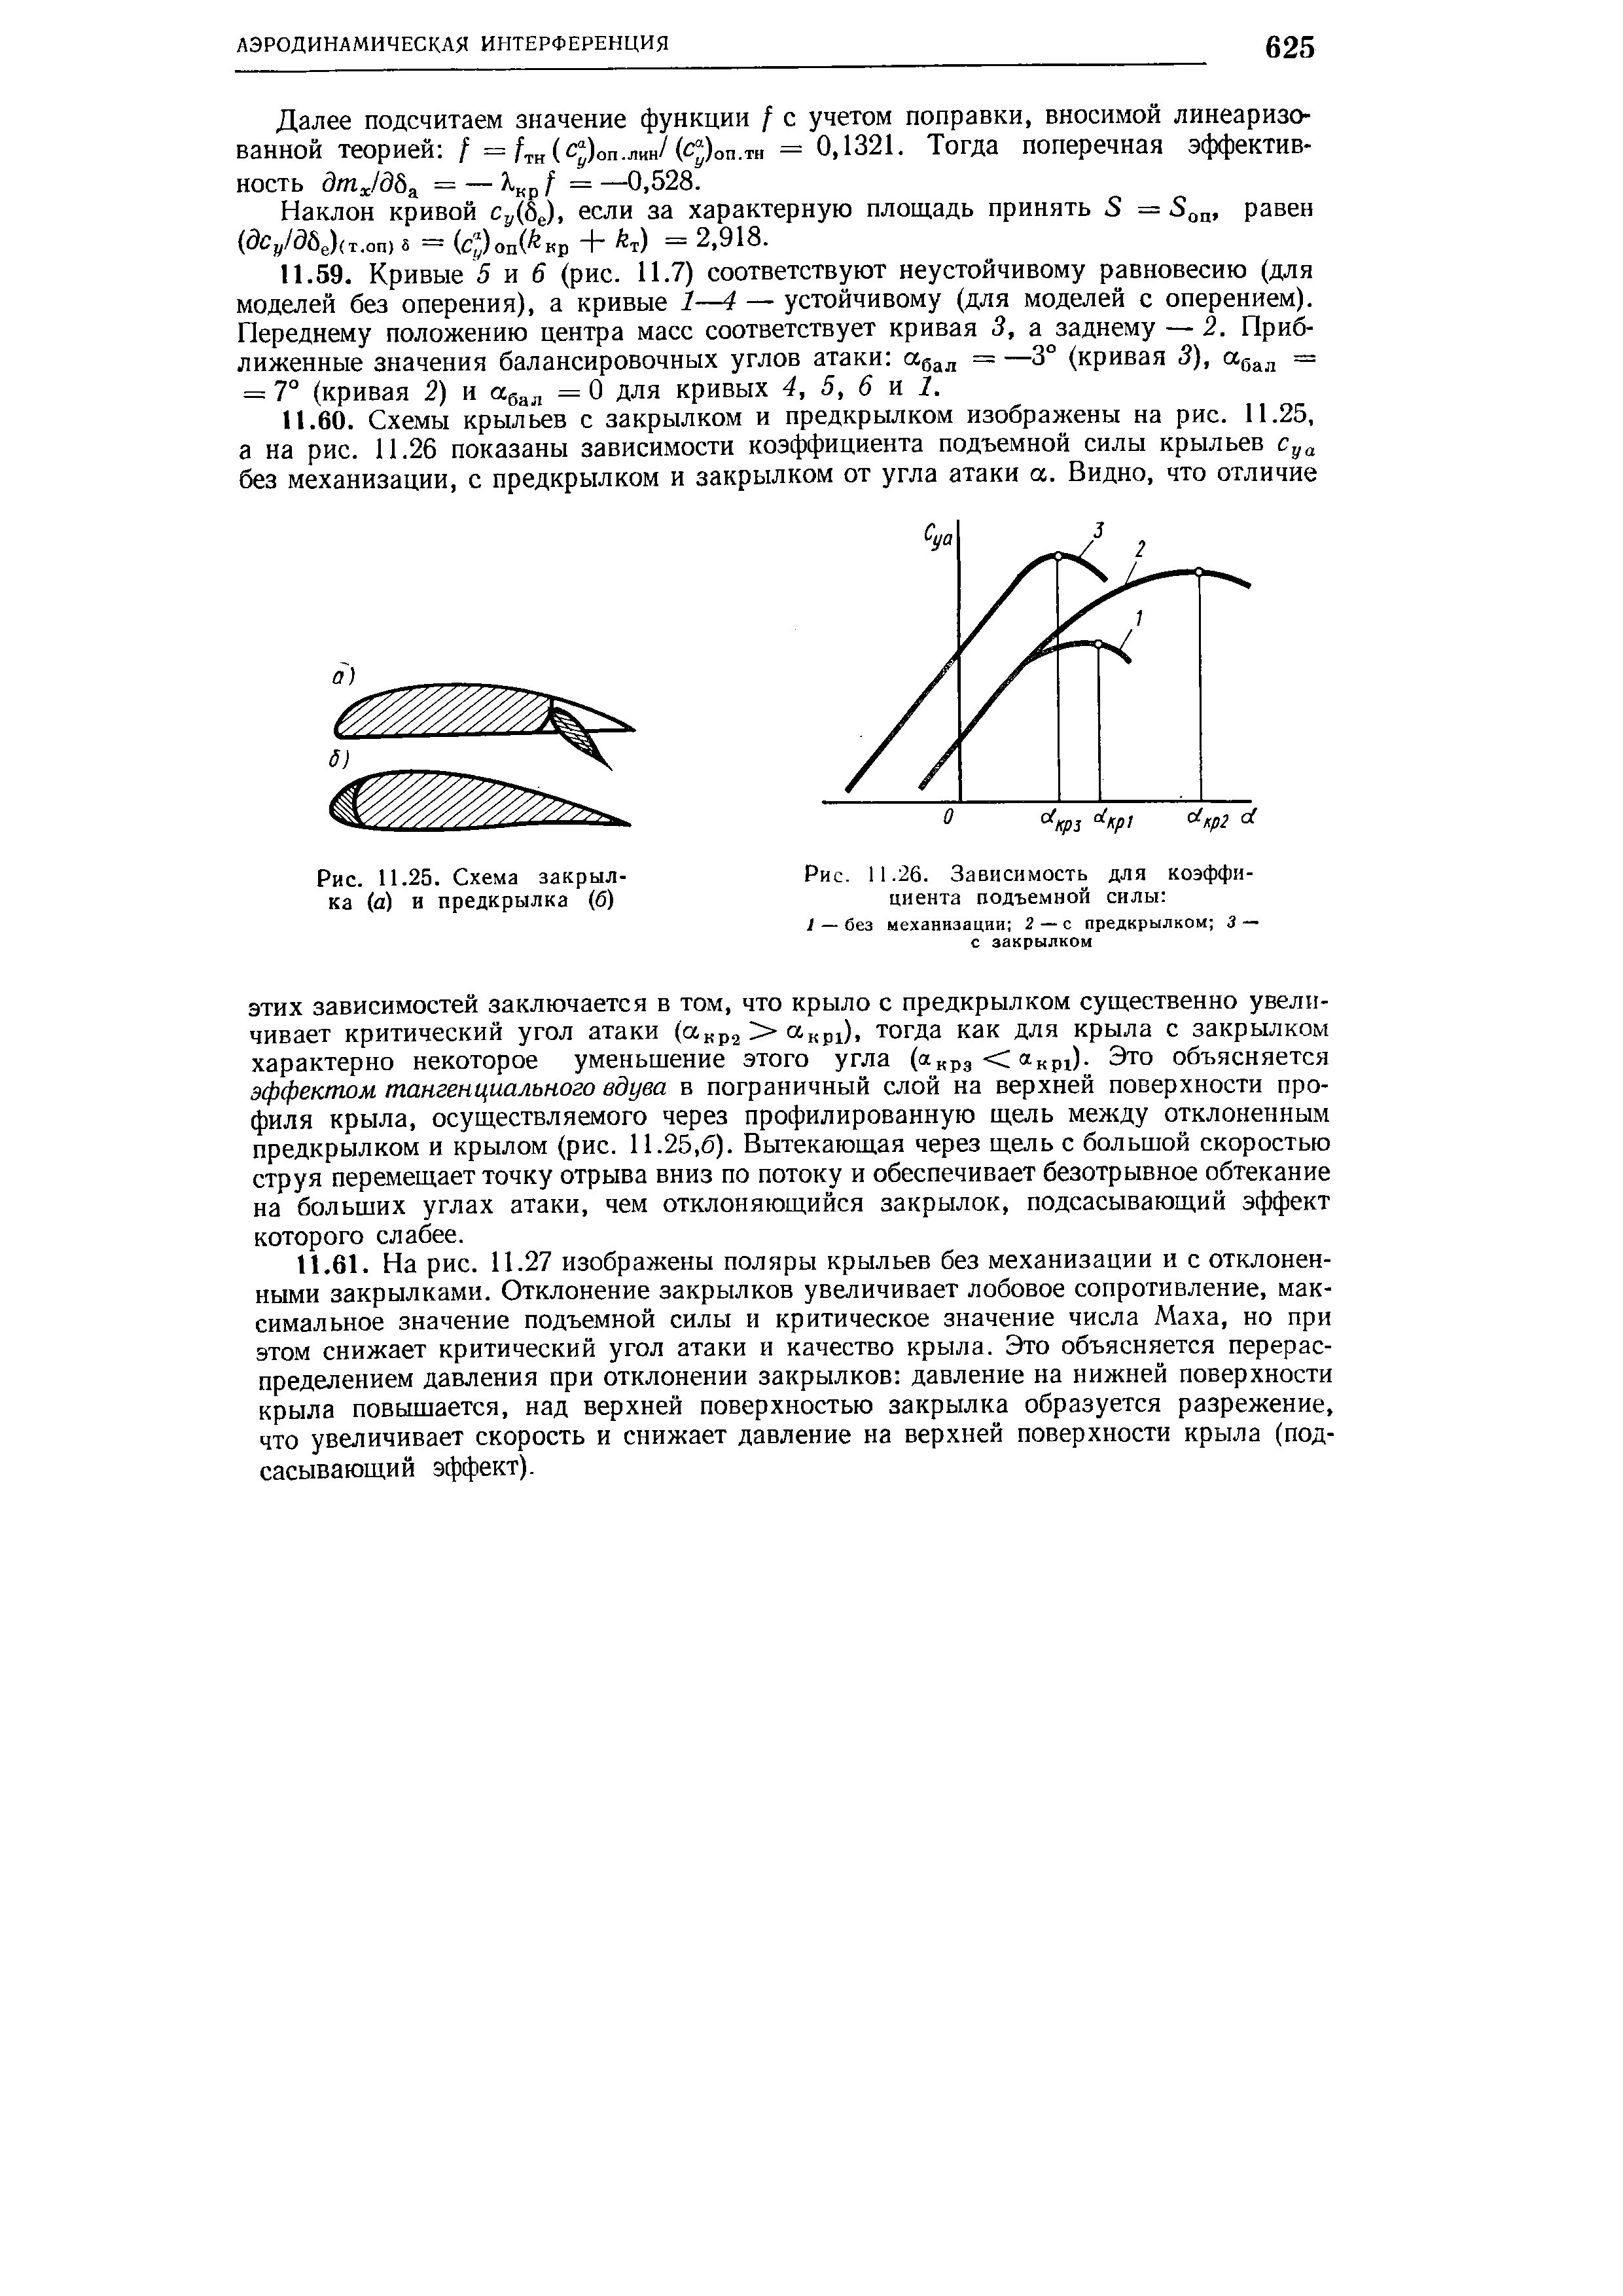 Рис. 11.25. Схема закрылка (а) и предкрылка (б)
